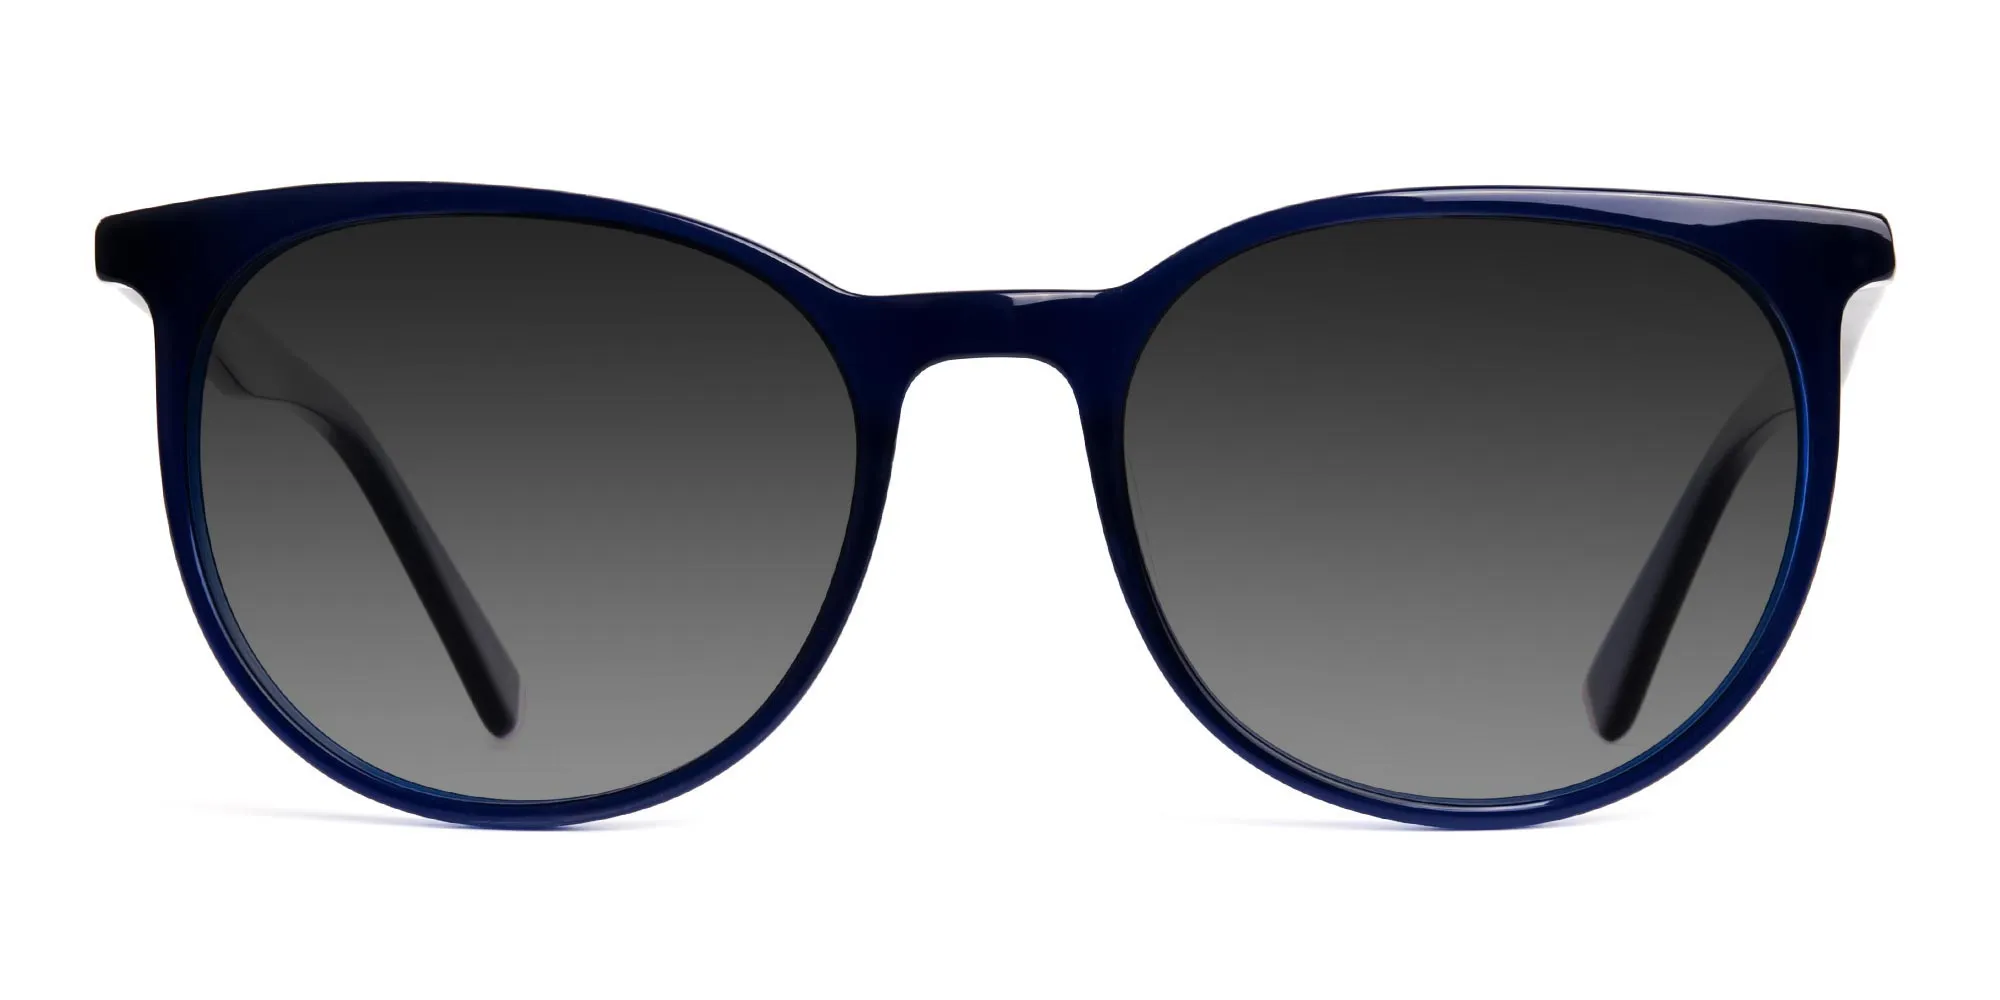 navy-blue-round-full-rim-grey-tinted-sunglasses-frames-2